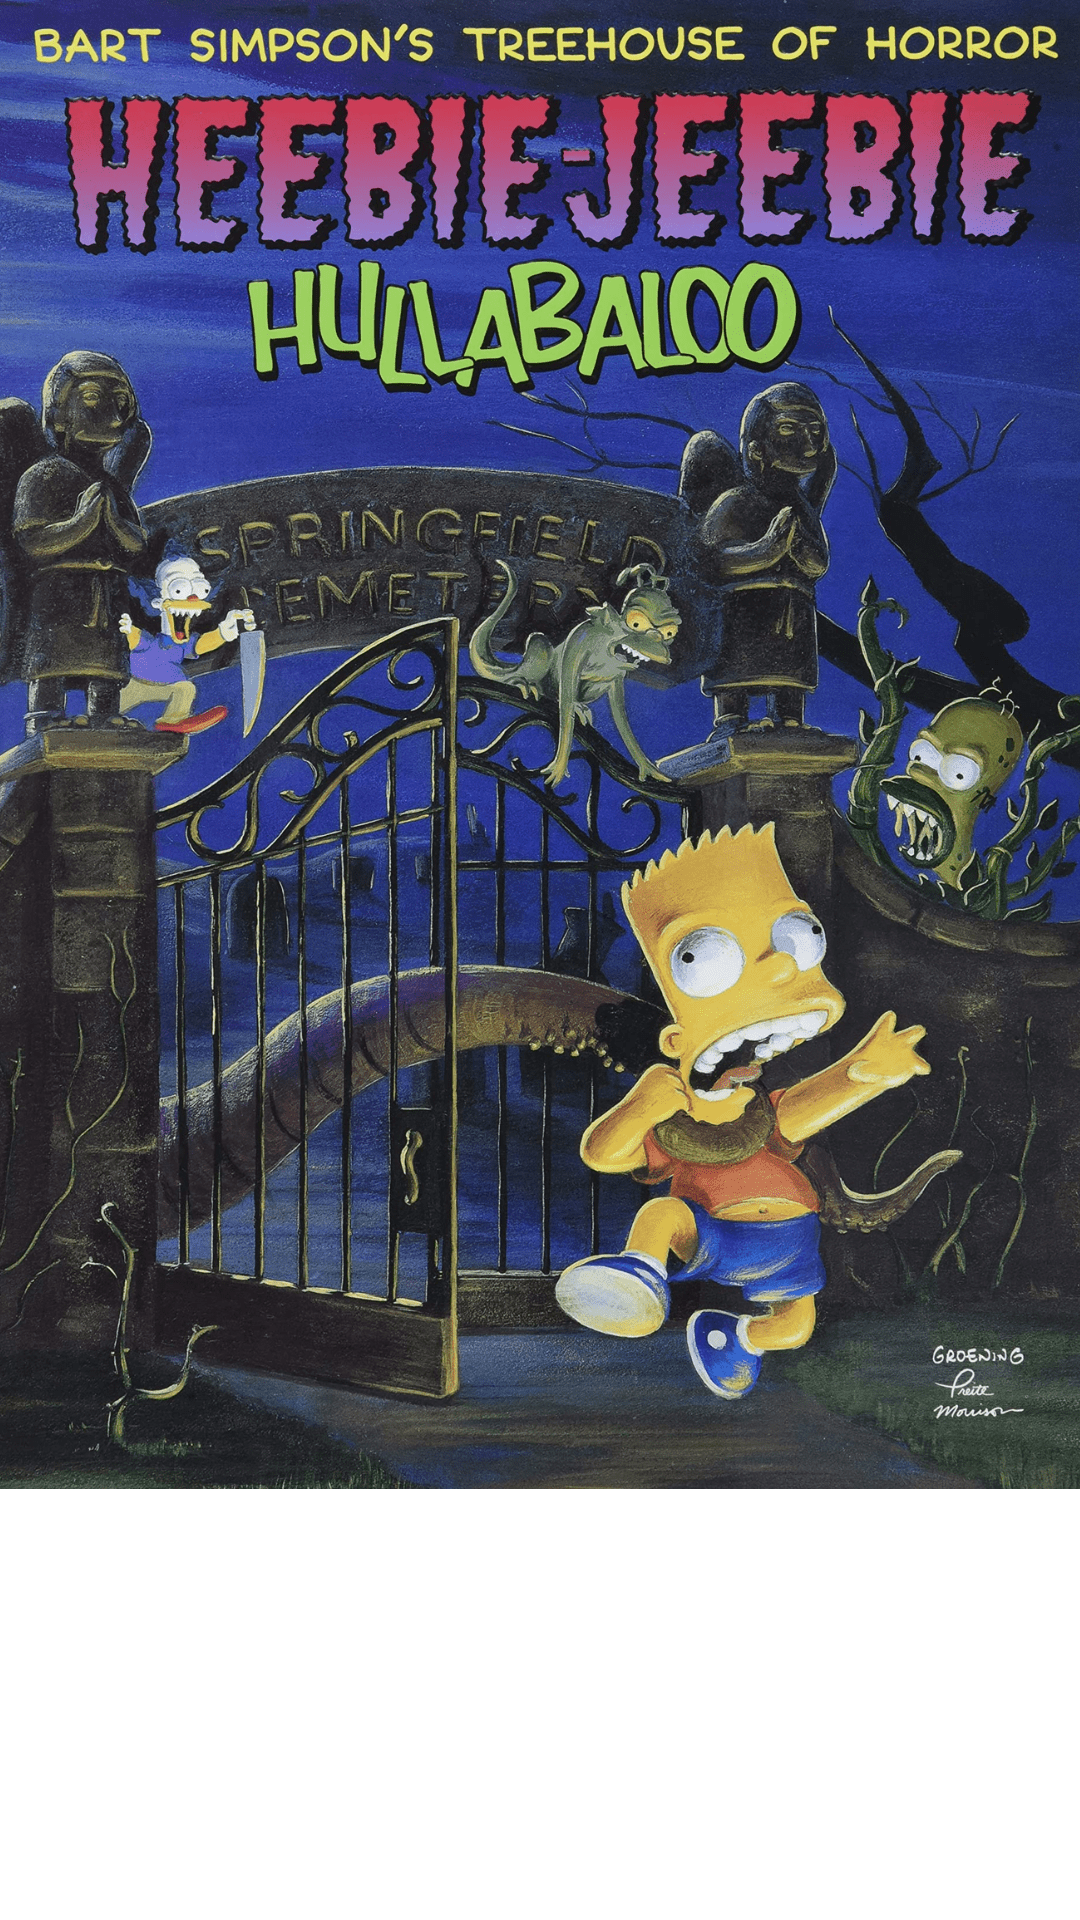 Bart Simpson's Treehouse of Horror